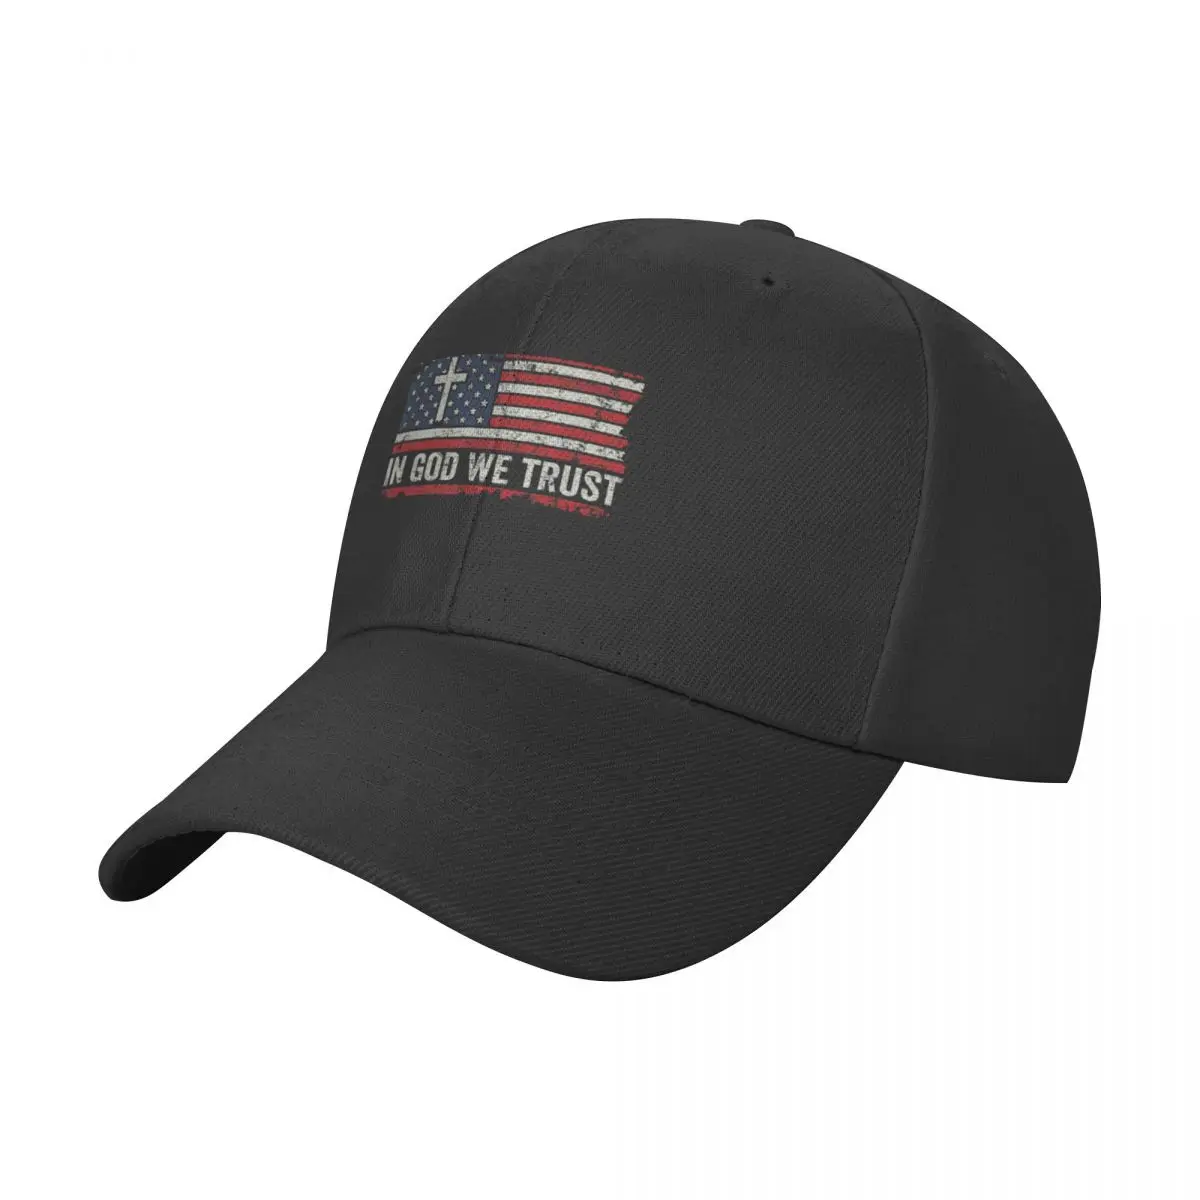 

In God We Trust - Vintage USA Flag Cross Patriotic Christian T-Shirt Baseball Cap |-F-| Hat Beach Hat Men Women's